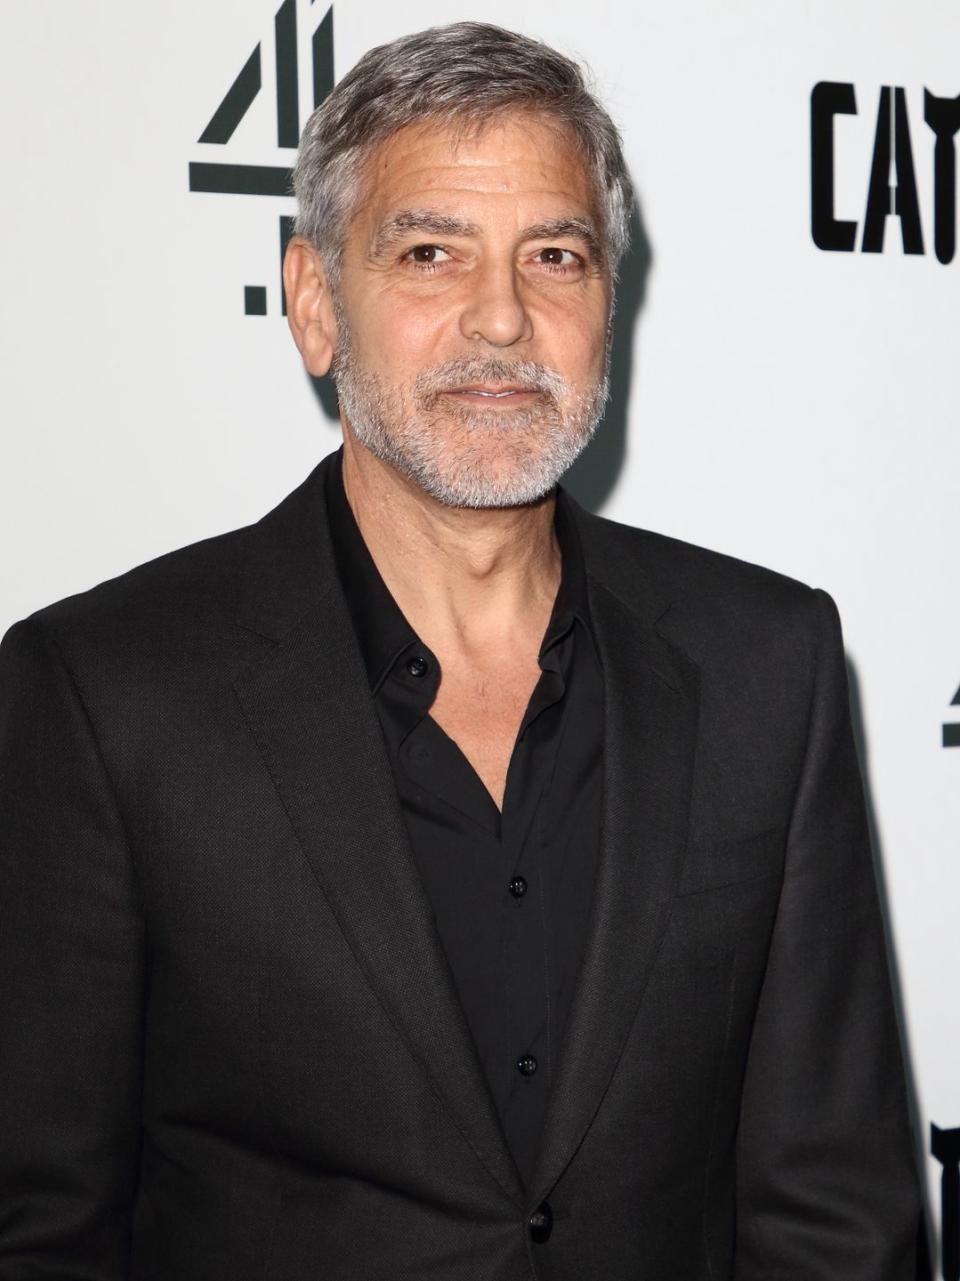 Now: George Clooney